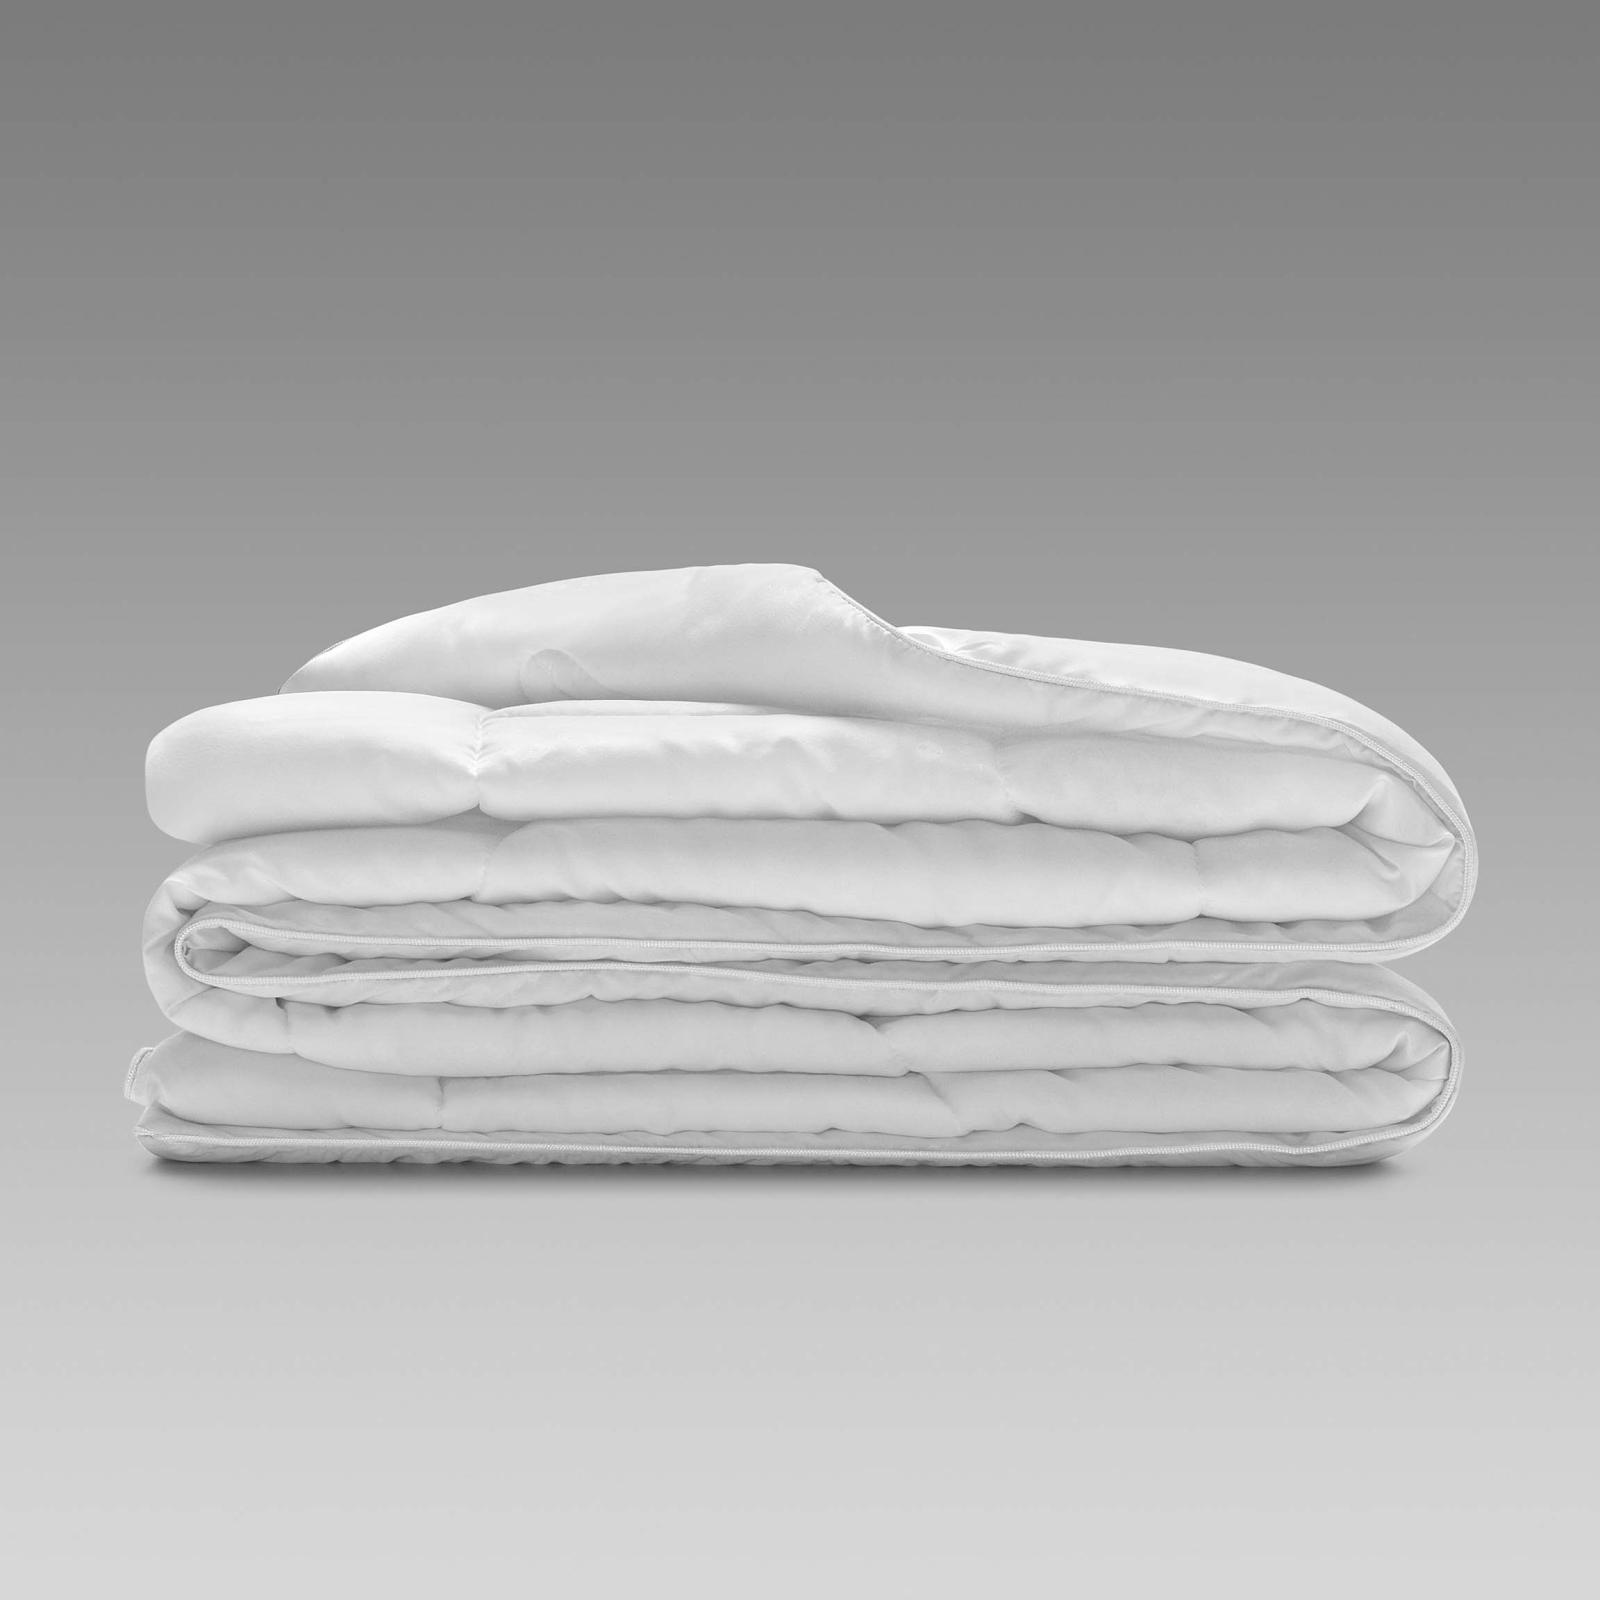 Одеяло Гелиос 220х240 см (20.04.12.0122), цвет белый, размер 220х240 см - фото 2